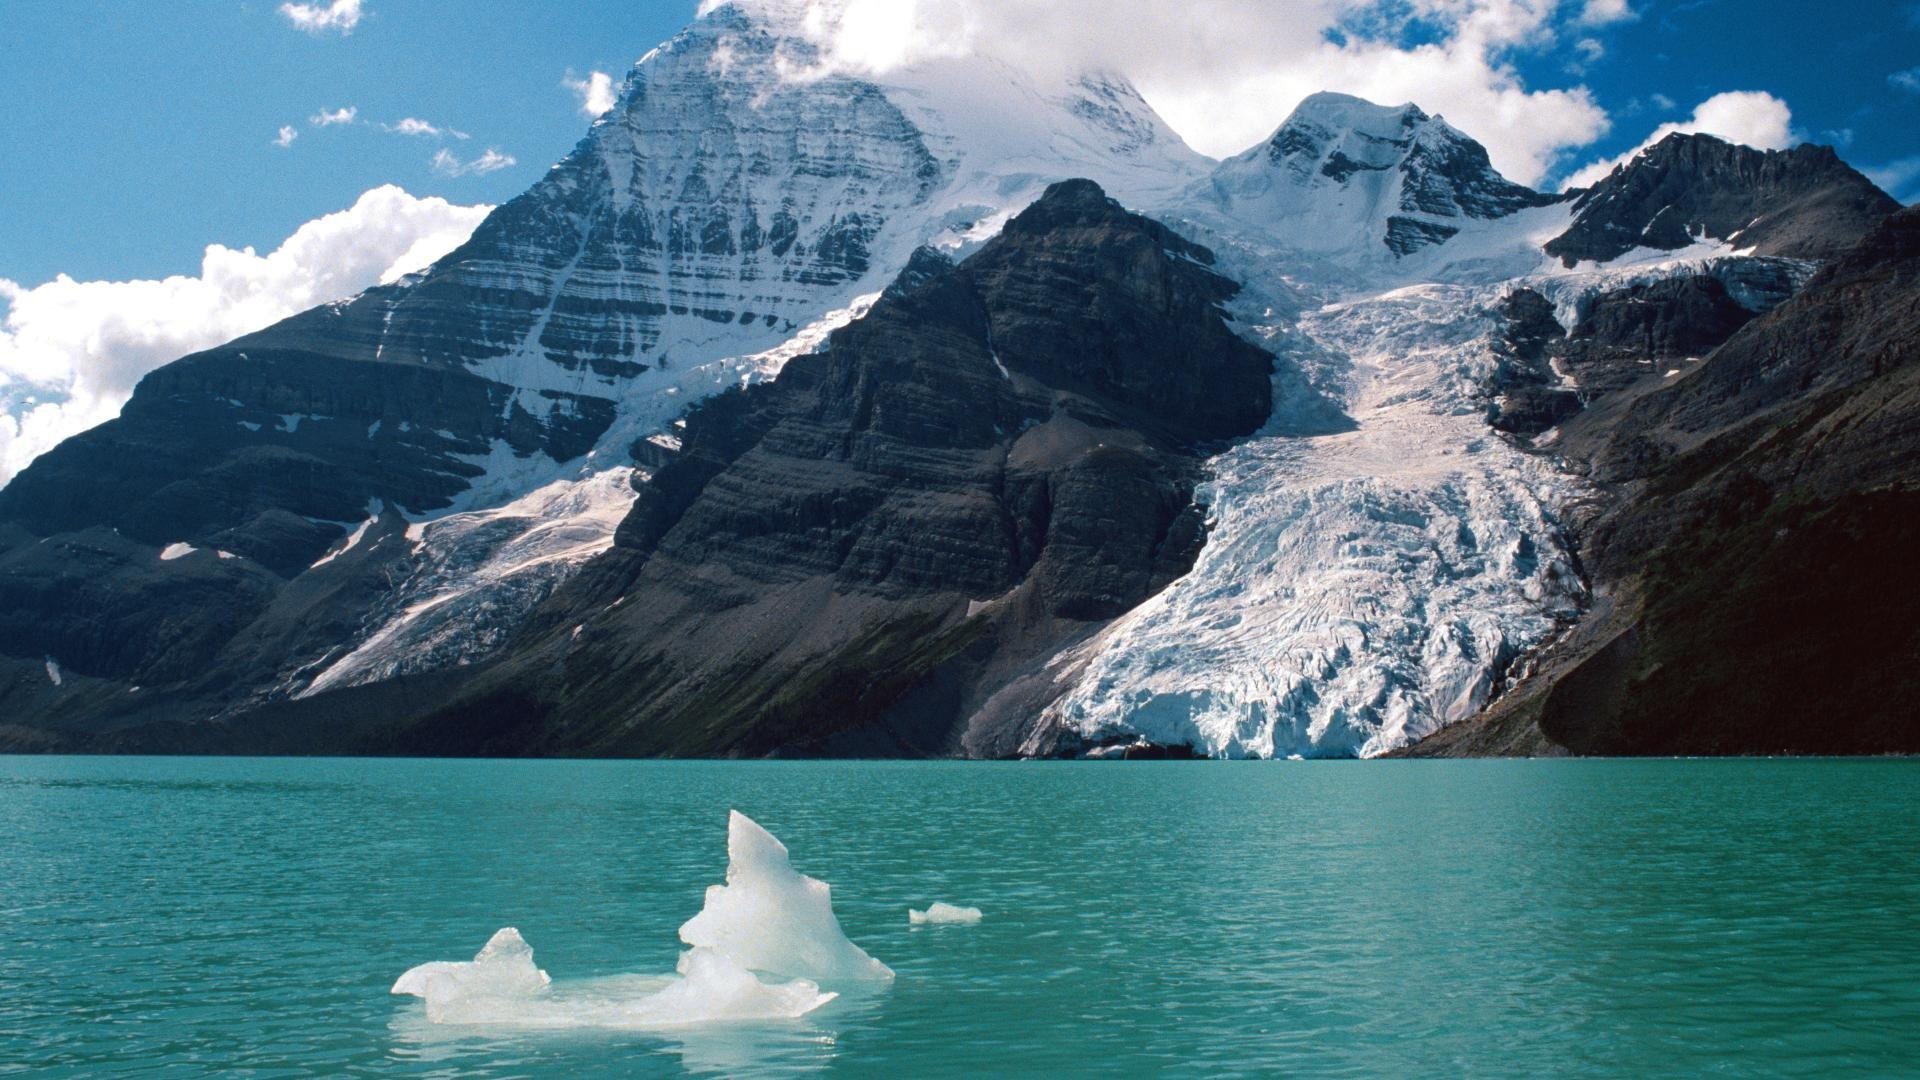 rockies wallpaper,natural landscape,nature,glacial lake,polar ice cap,mountainous landforms